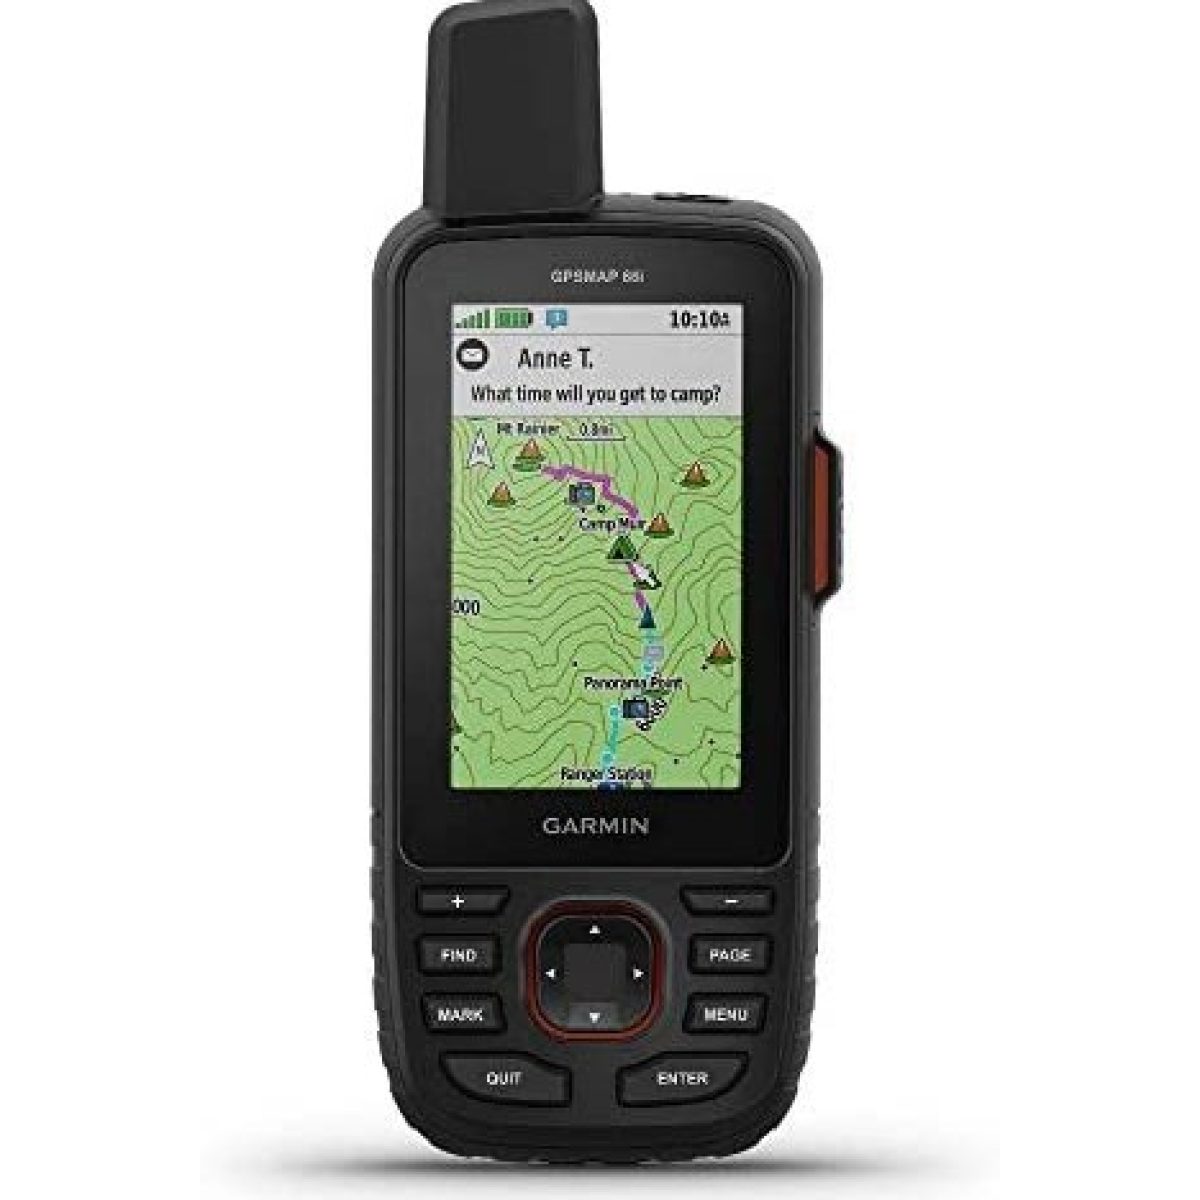 Garmin GPSMAP 67i GPS & inReach Rental